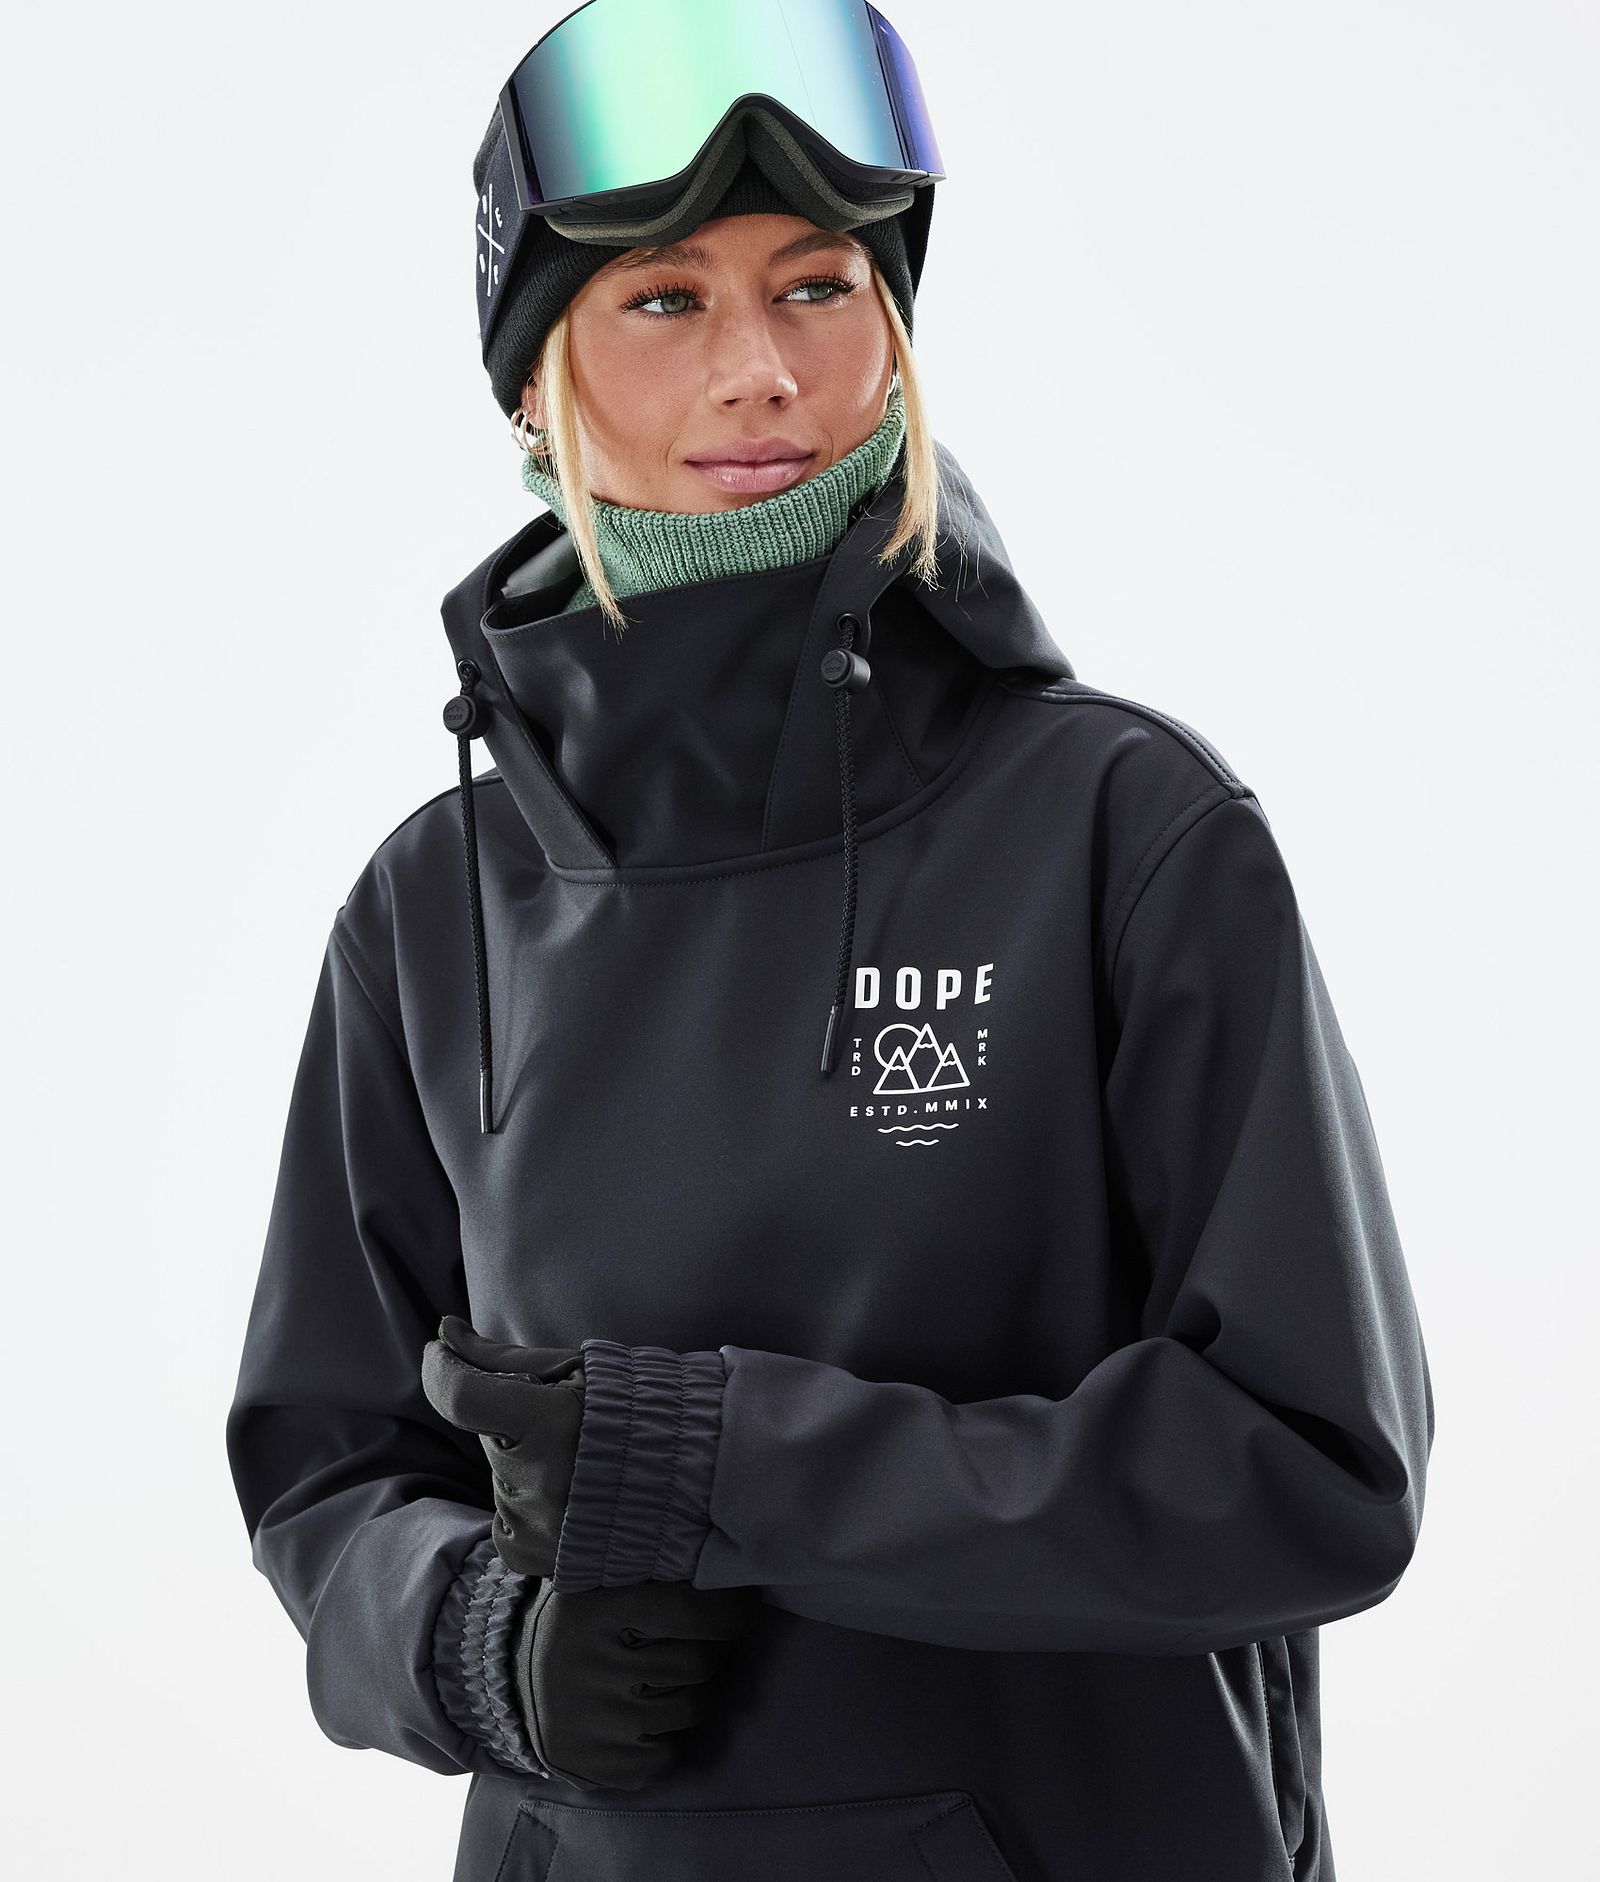 Dope Yeti W 2022 Ski Jacket Women Summit Black